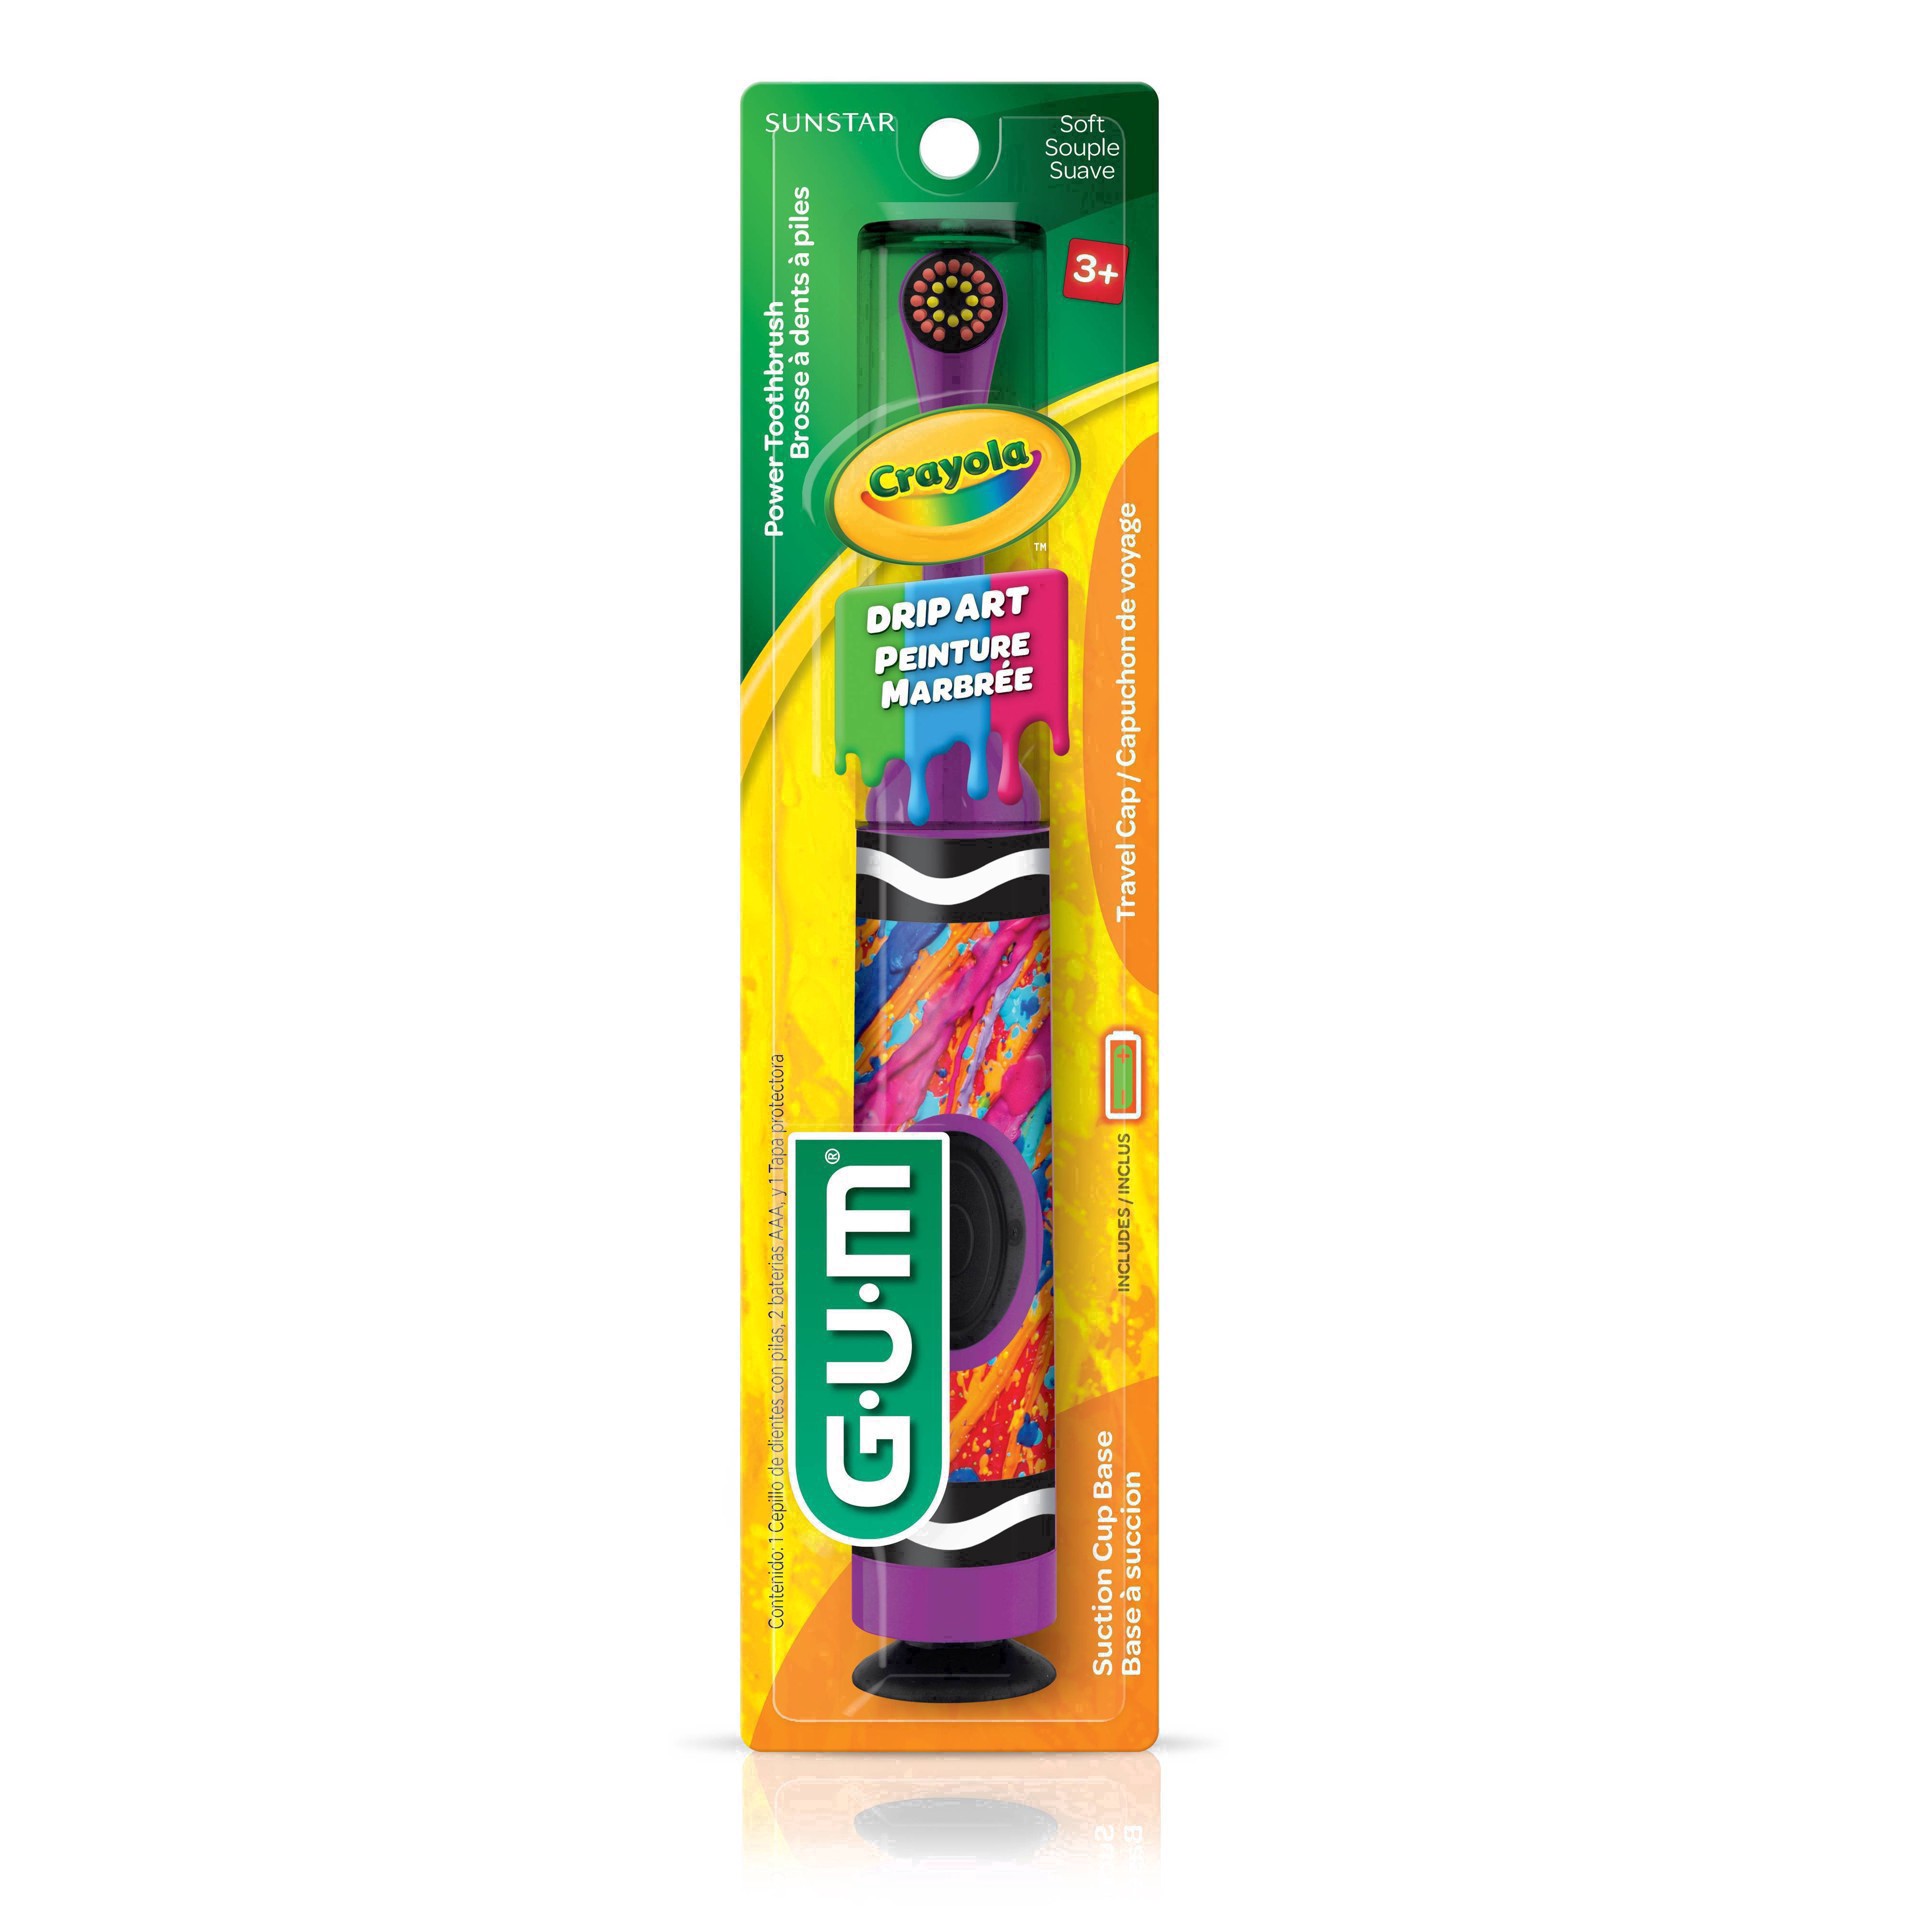 slide 24 of 50, G-U-M Crayola Electric Toothbrush, 1 ct